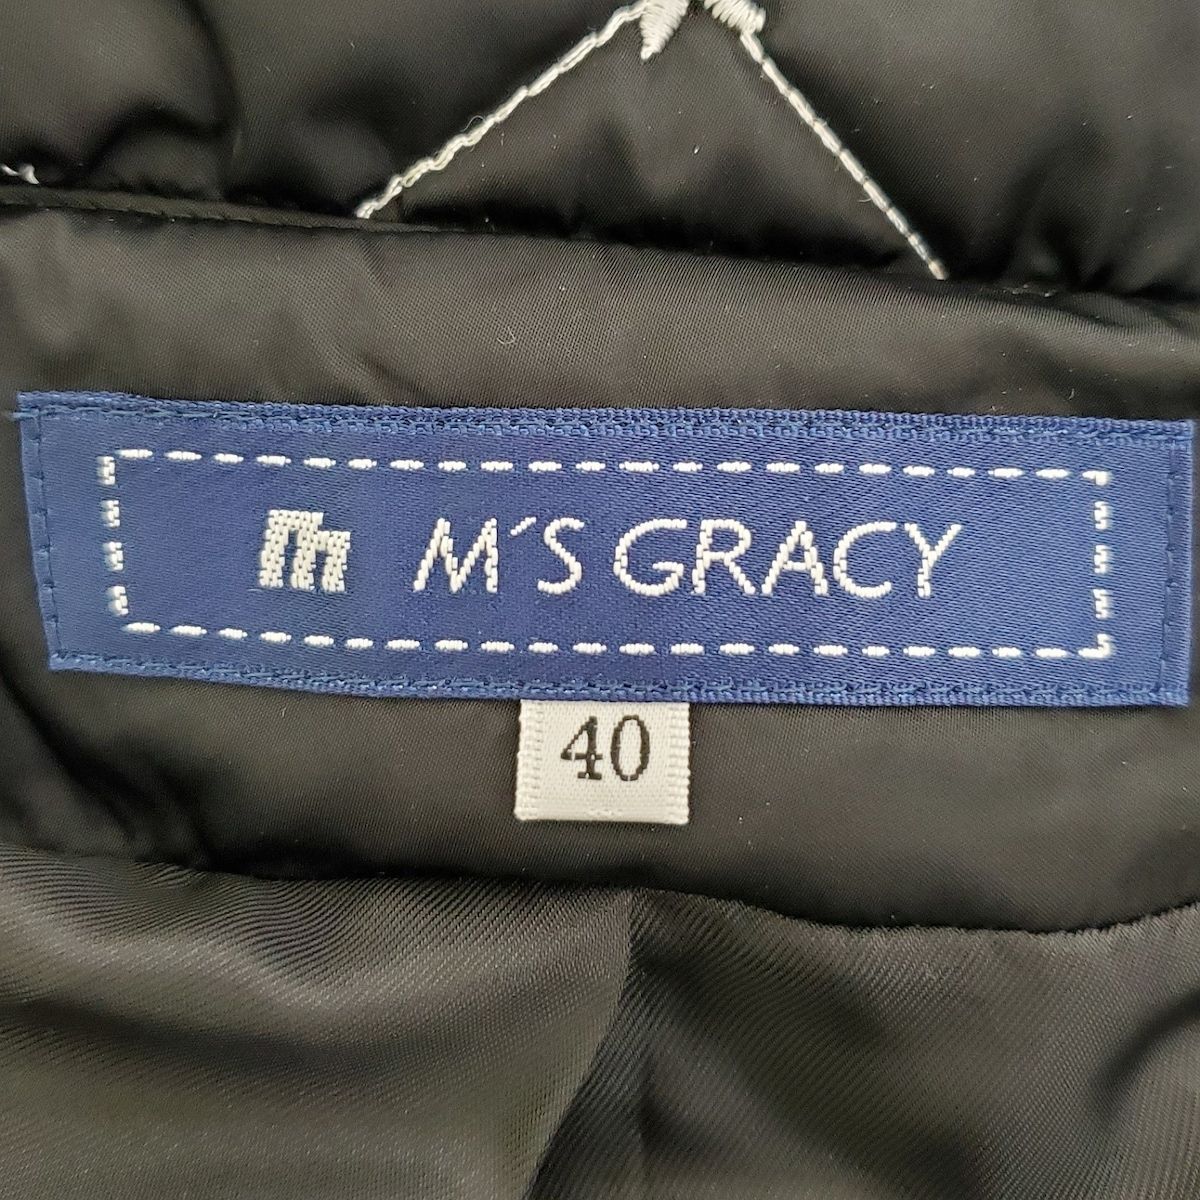 M'S GRACY(エムズグレイシー) コート サイズ40 M レディース美品 - 黒